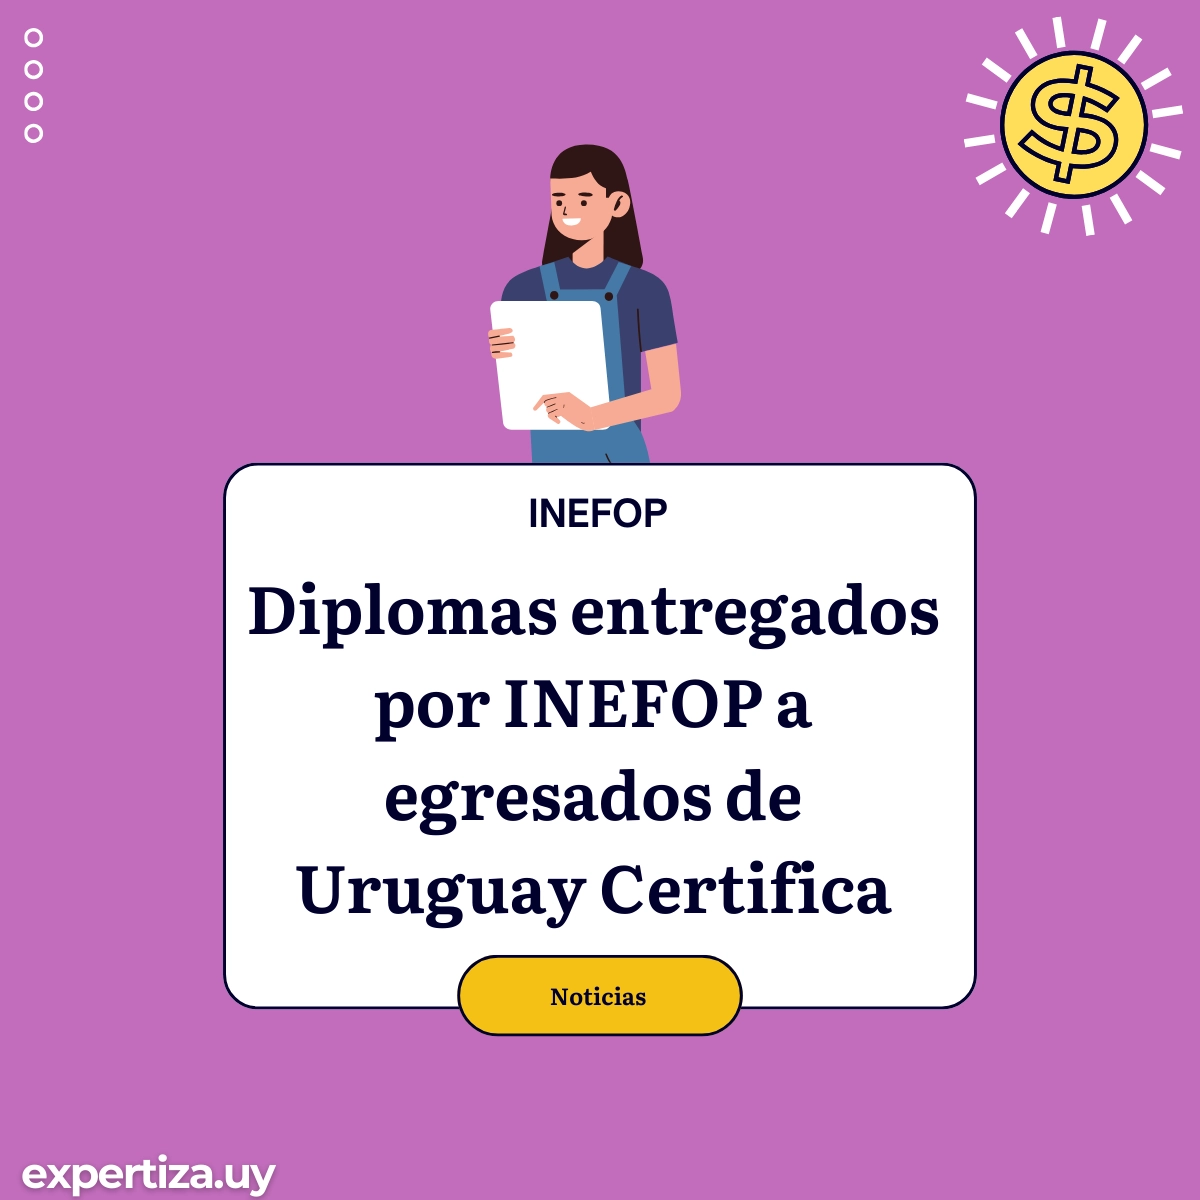 Diplomas entregados por INEFOP a egresados de Uruguay Certifica.